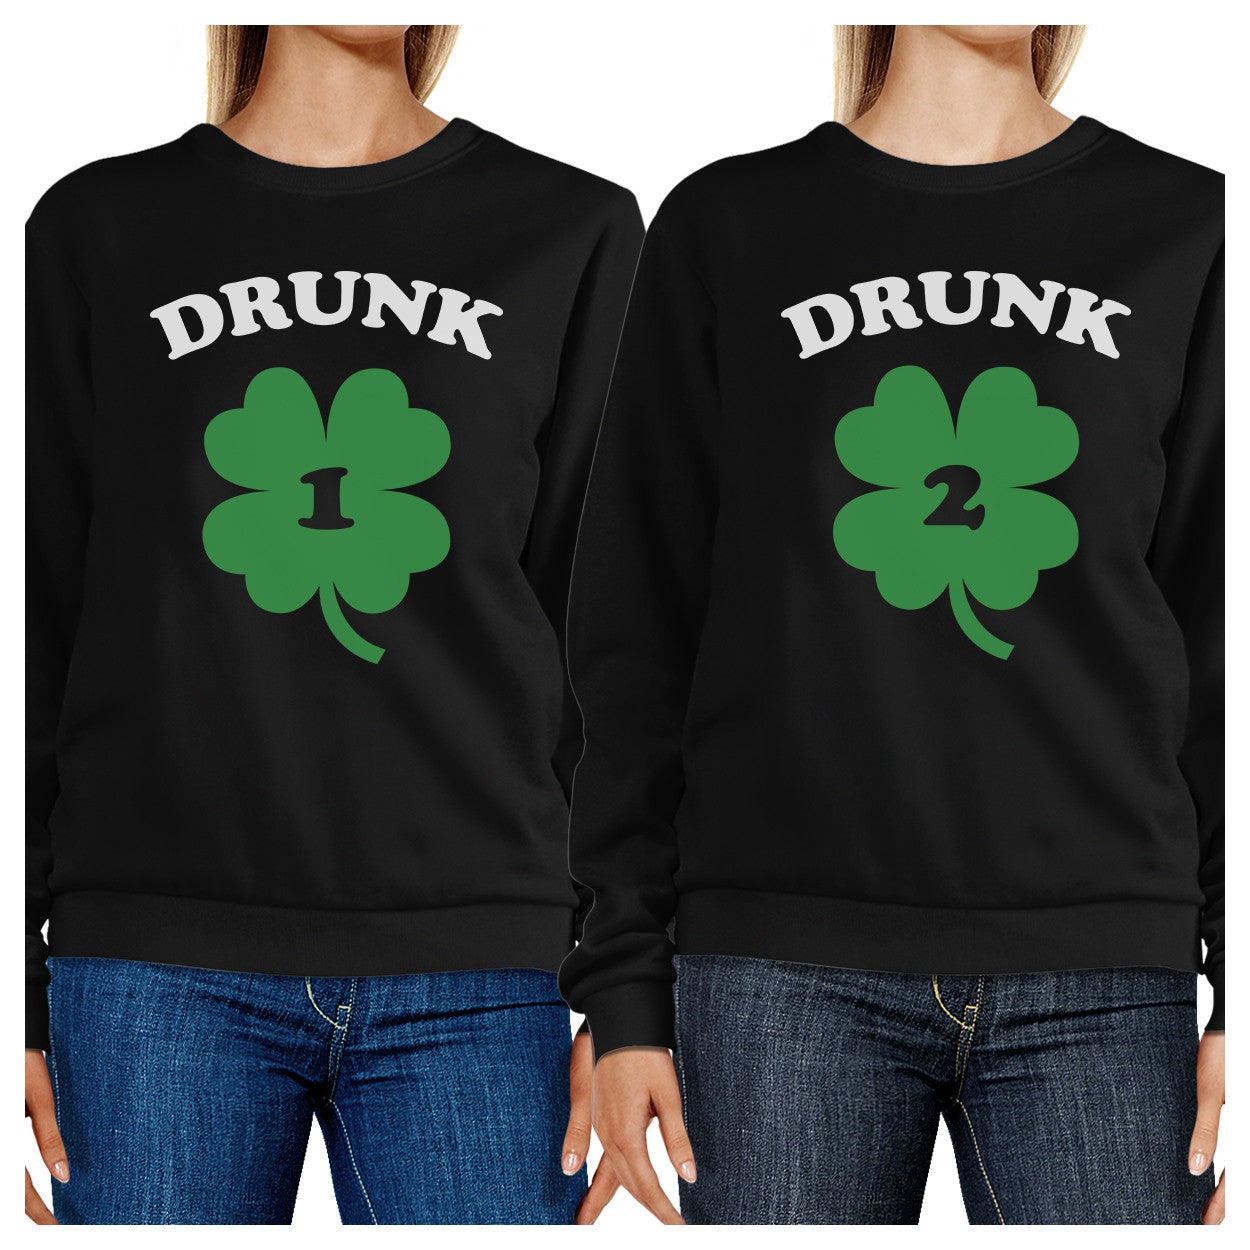 Drunk1 Drunk2 Cute Best Friend Matching Sweatshirt Funny Gift Ideas - 365 In Love